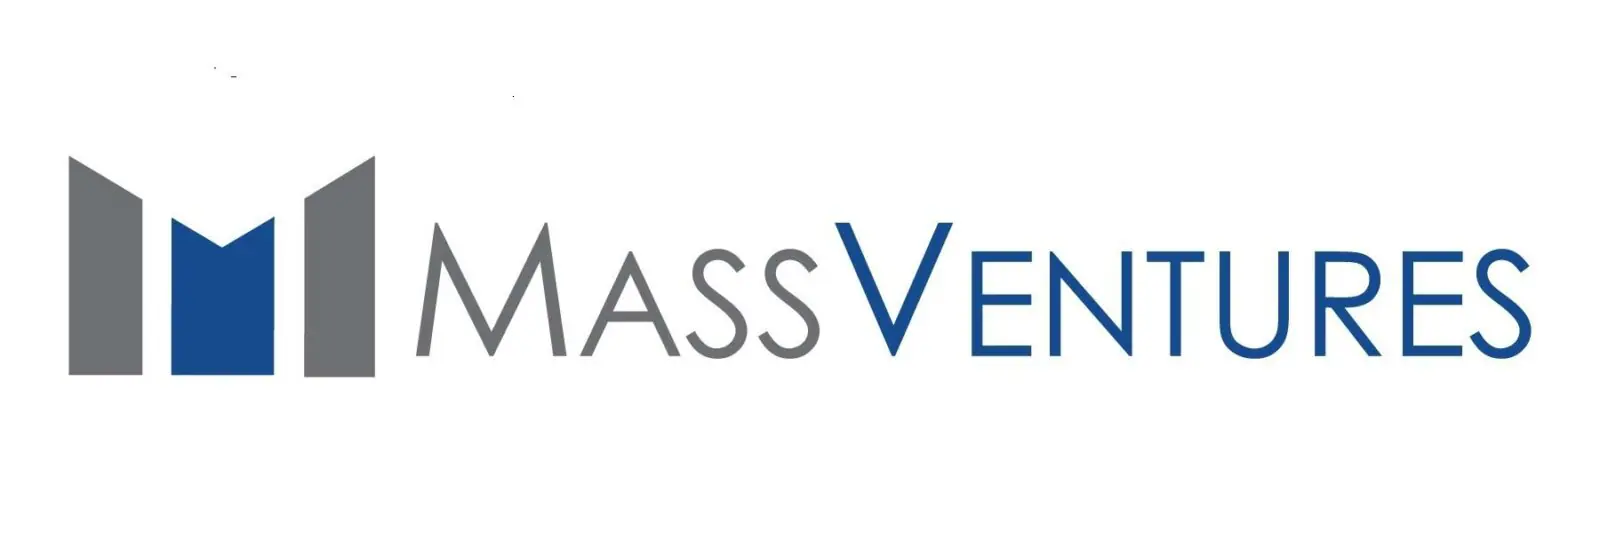 MassVentures logo